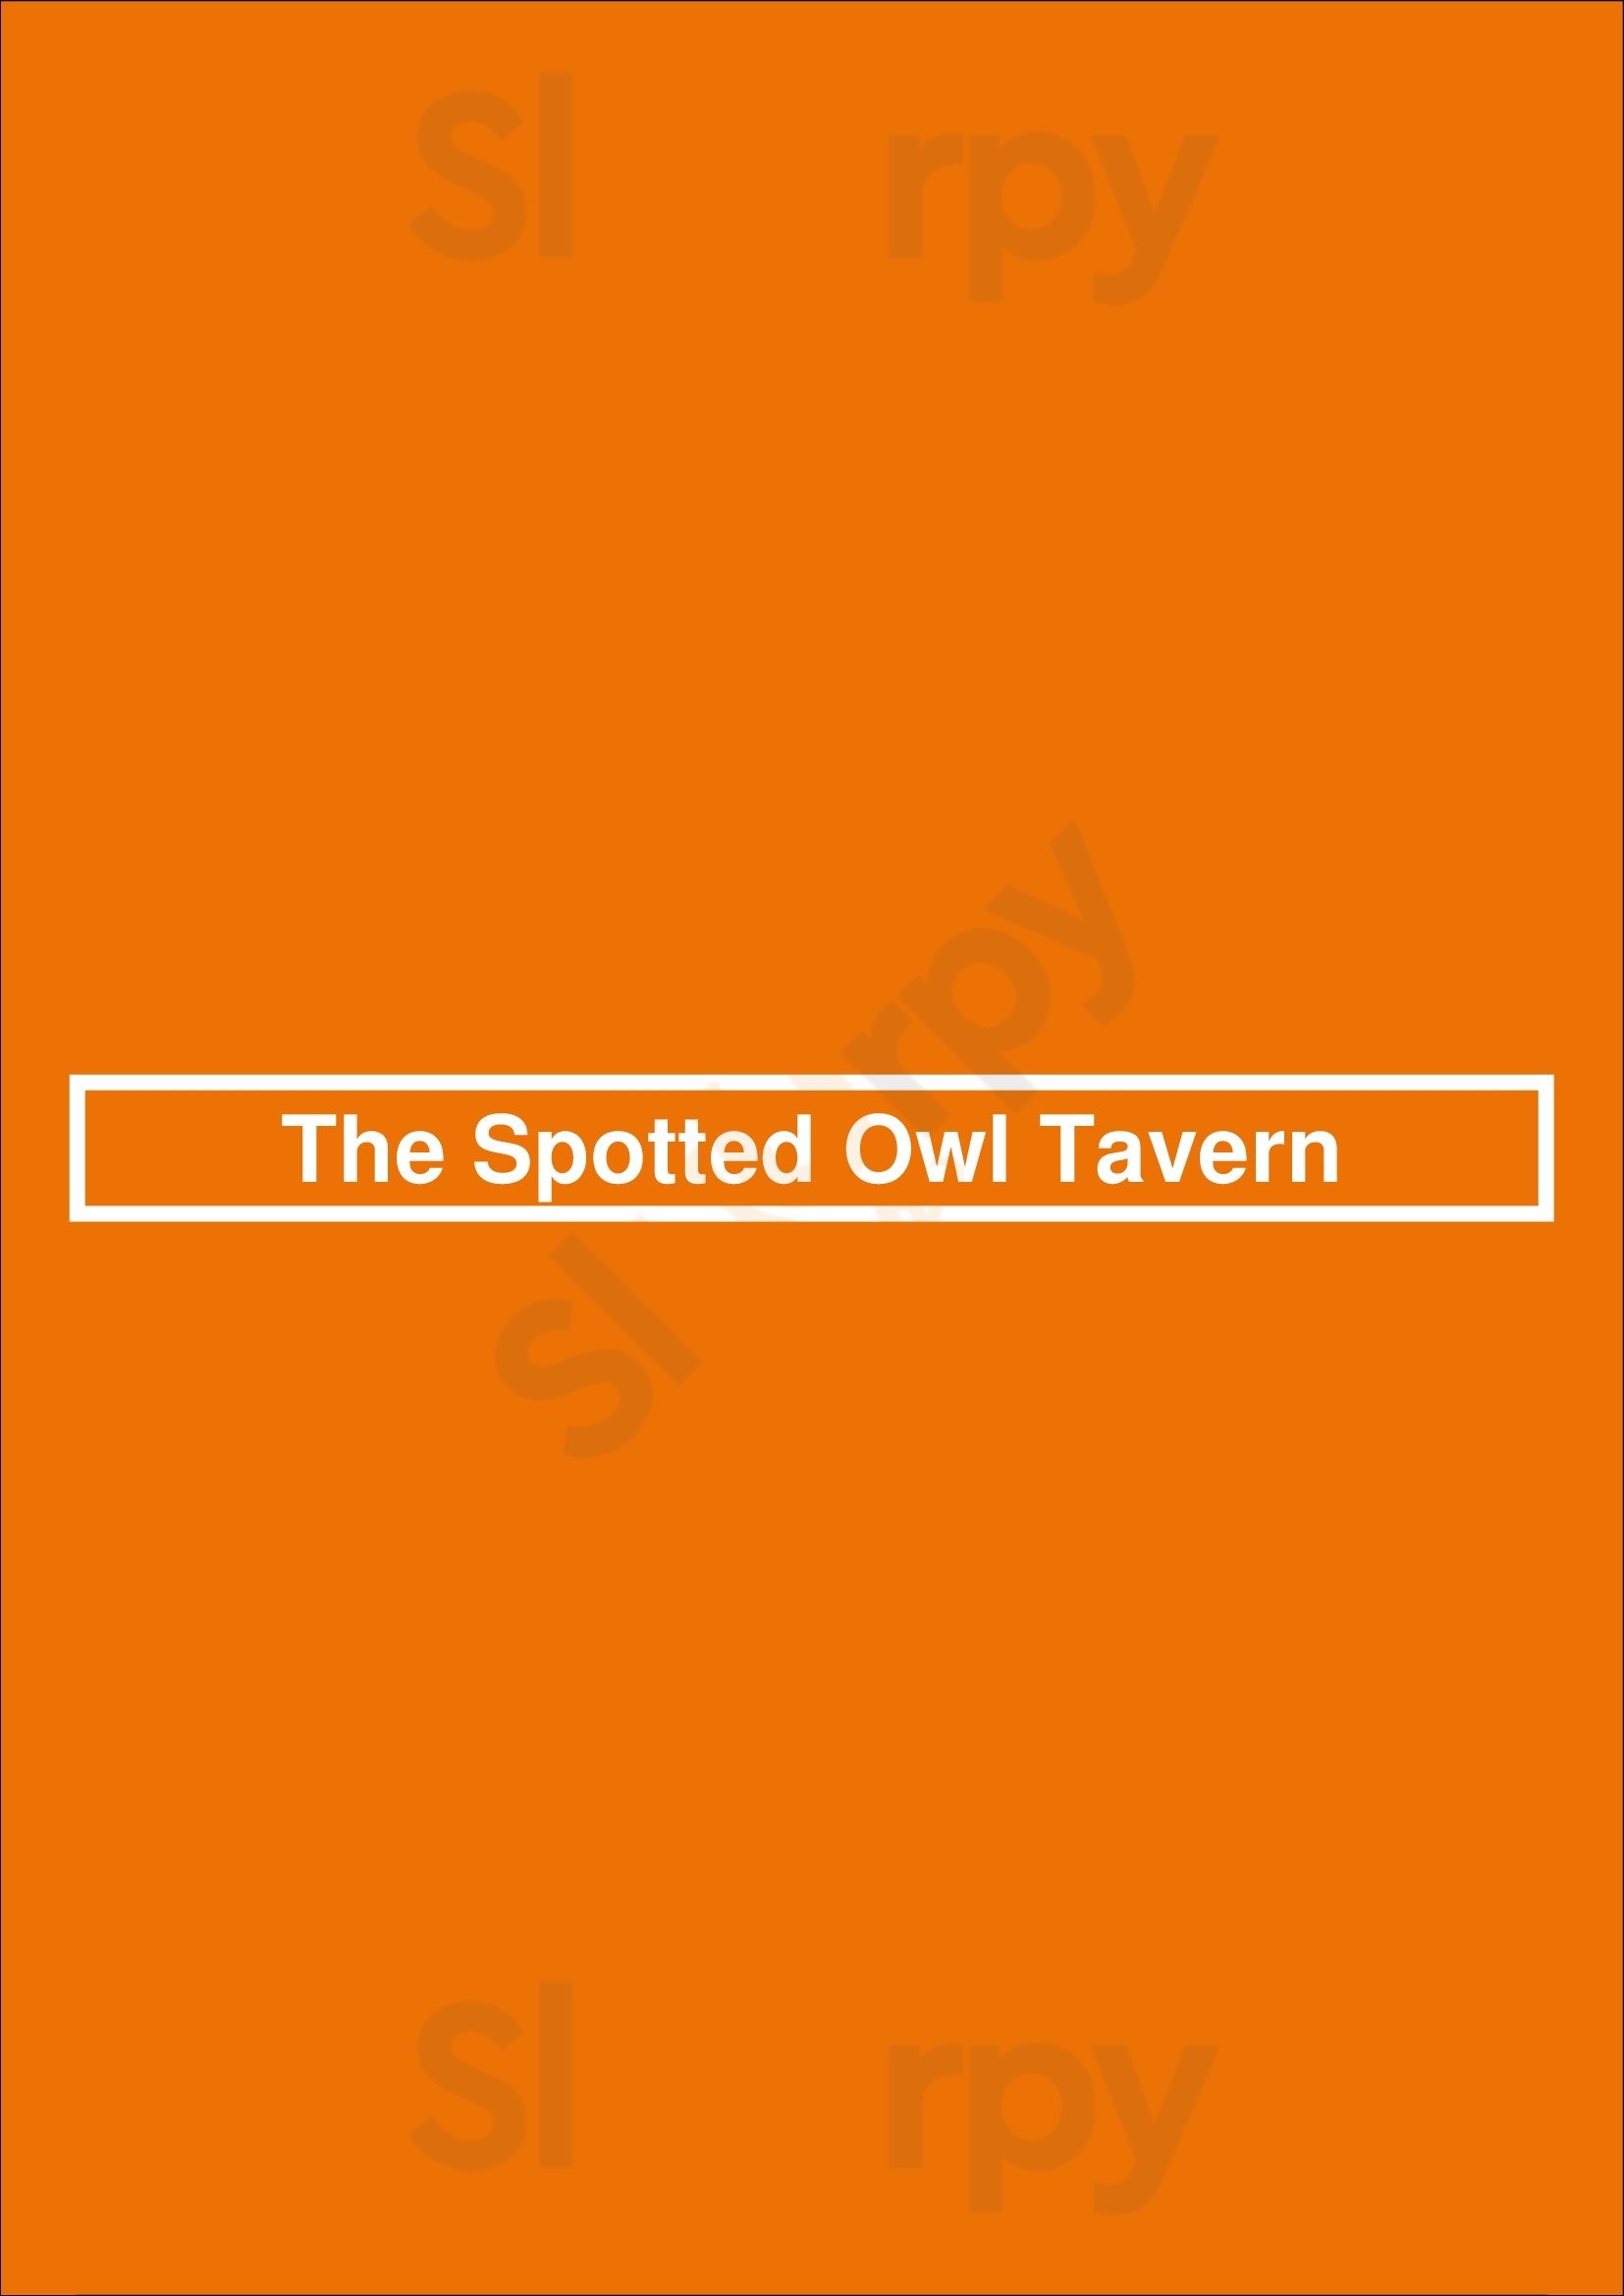 The Spotted Owl Tavern New York City Menu - 1